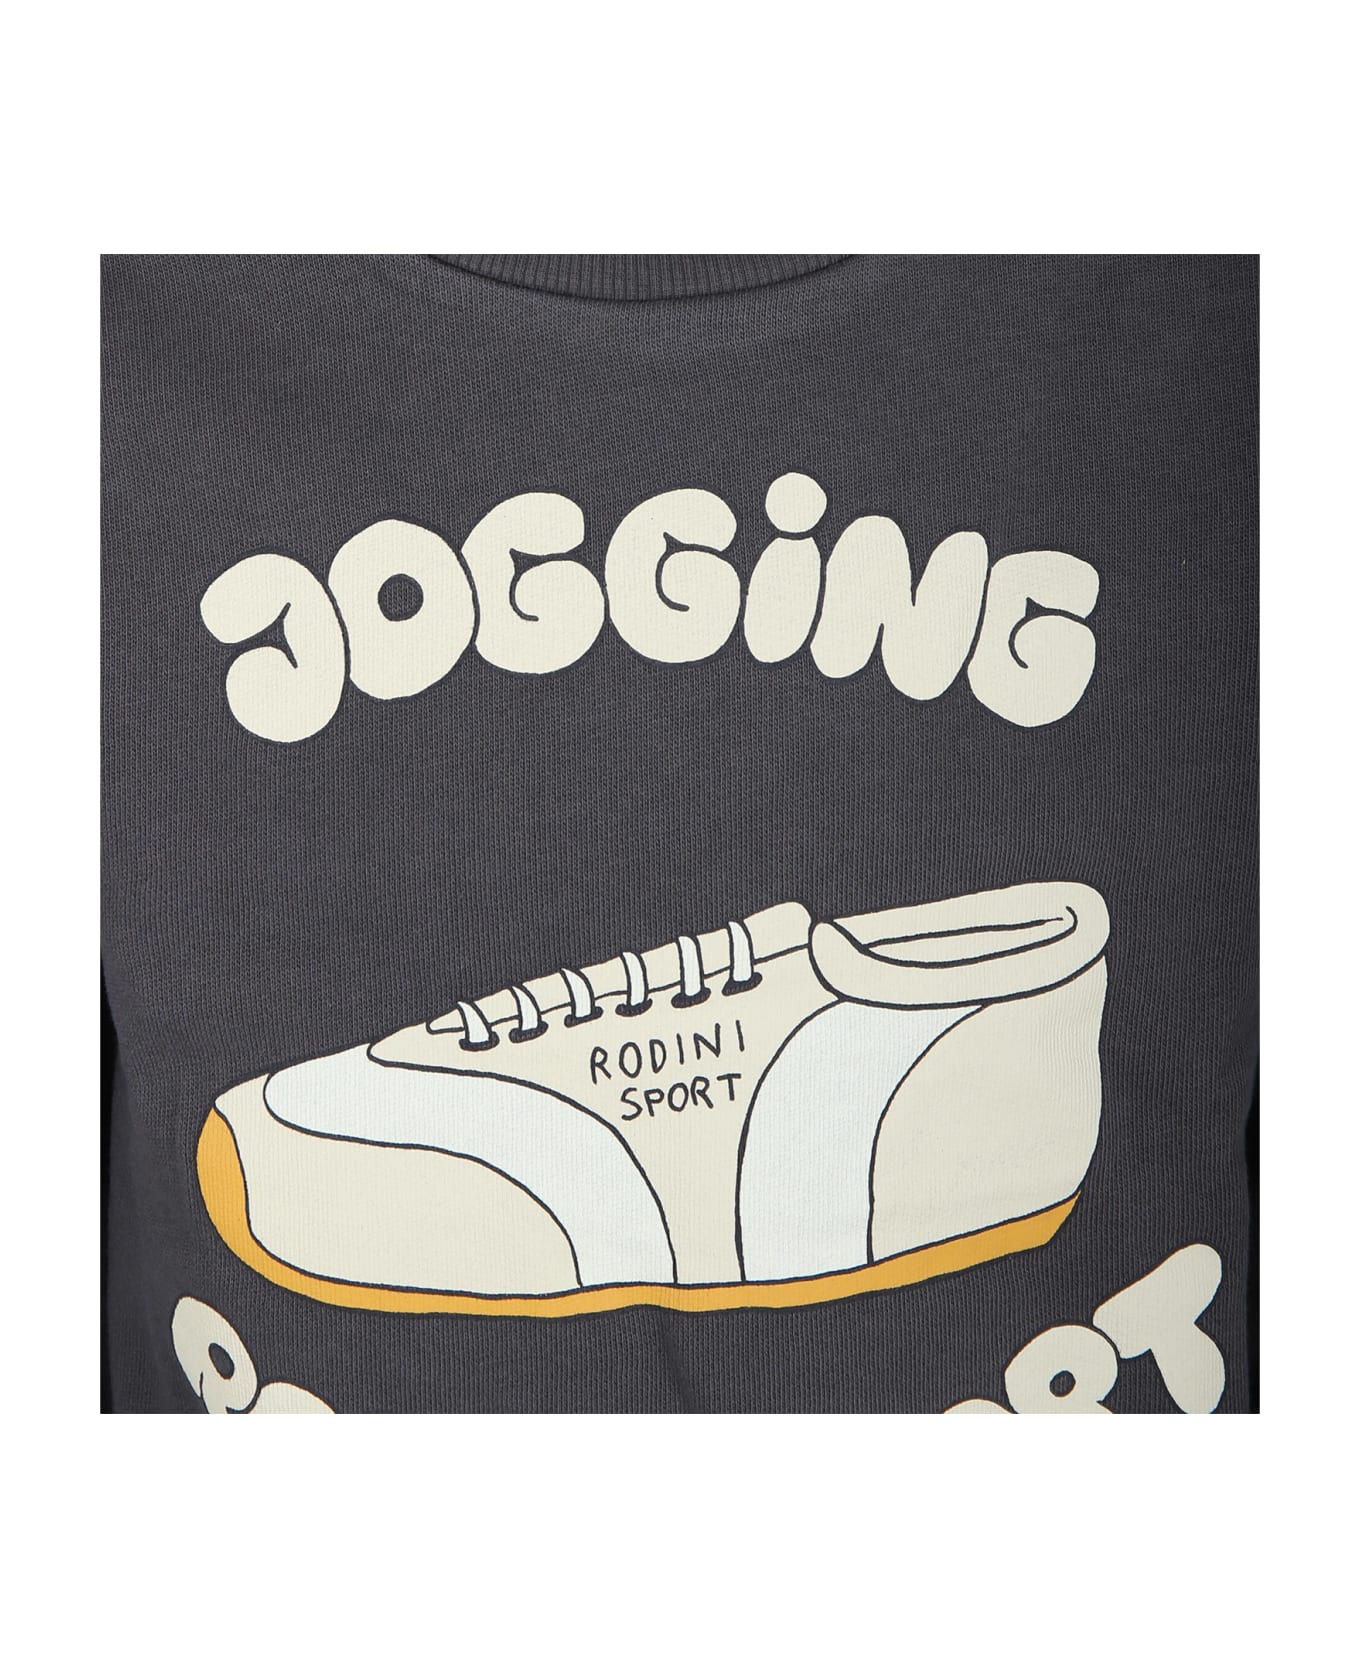 Mini Rodini Gray Sweatshirt For Kids With Jogging Sneakers Print - Grey ニットウェア＆スウェットシャツ